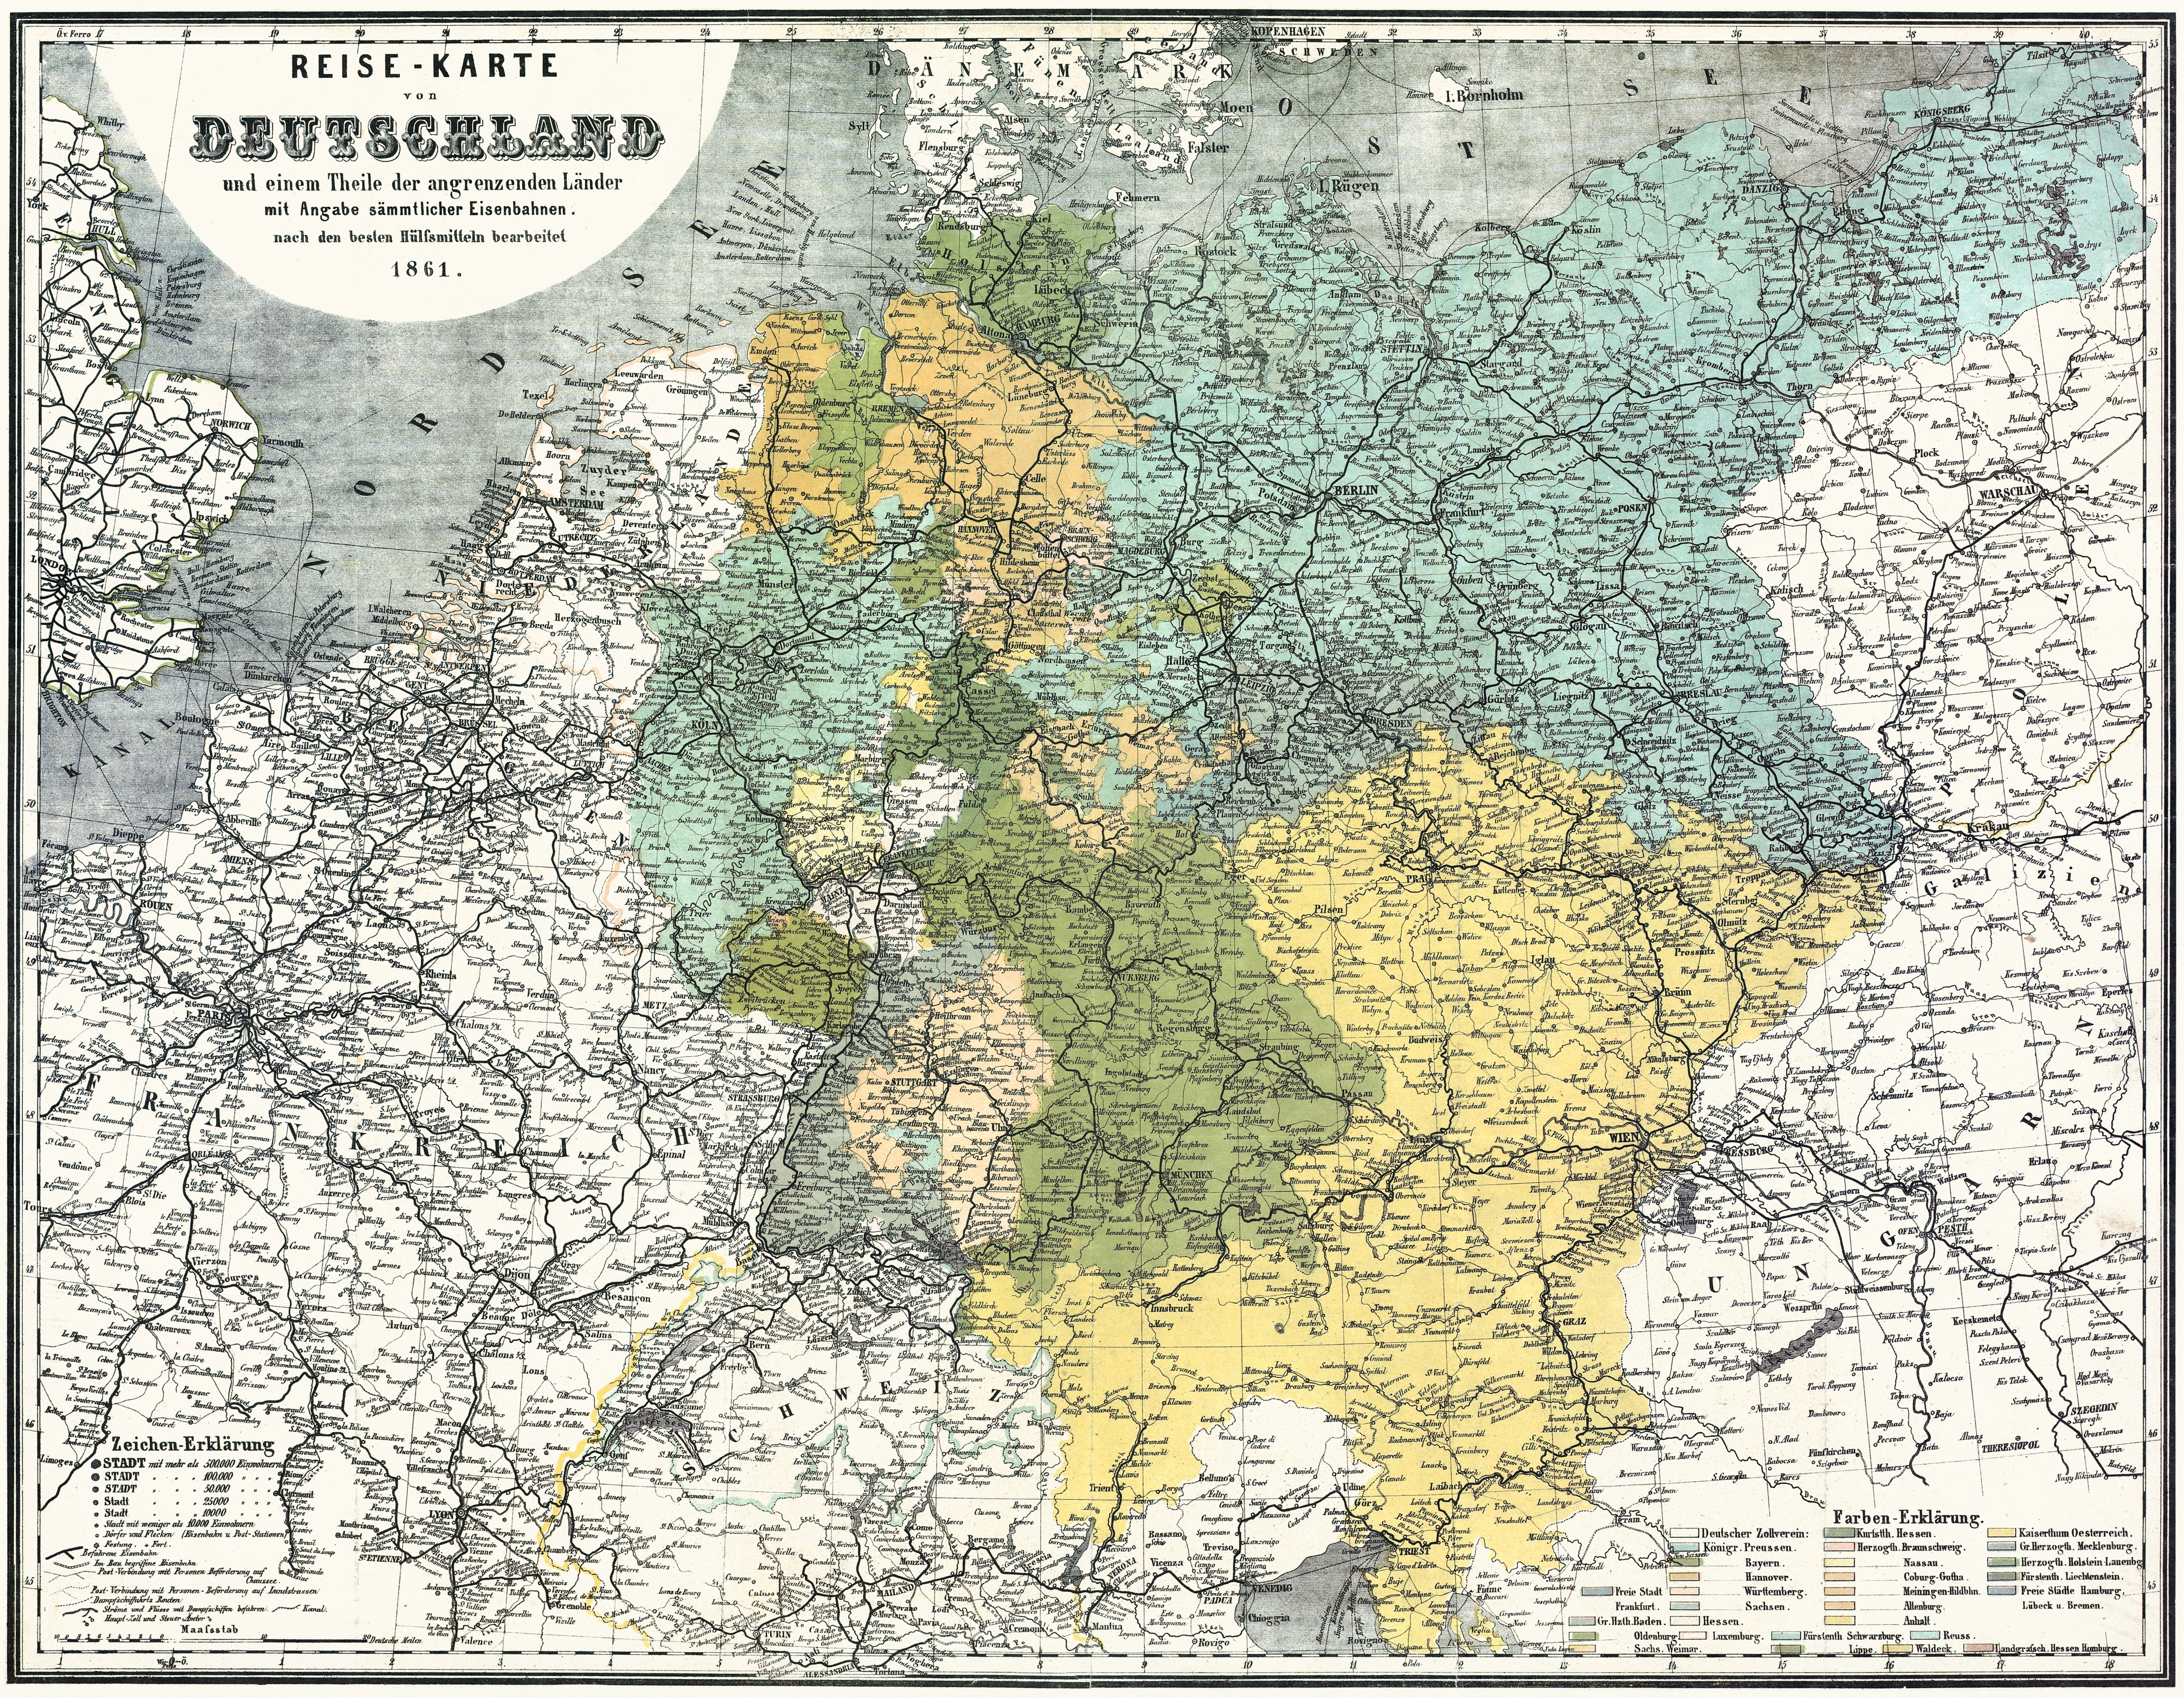 German rail network in 1861